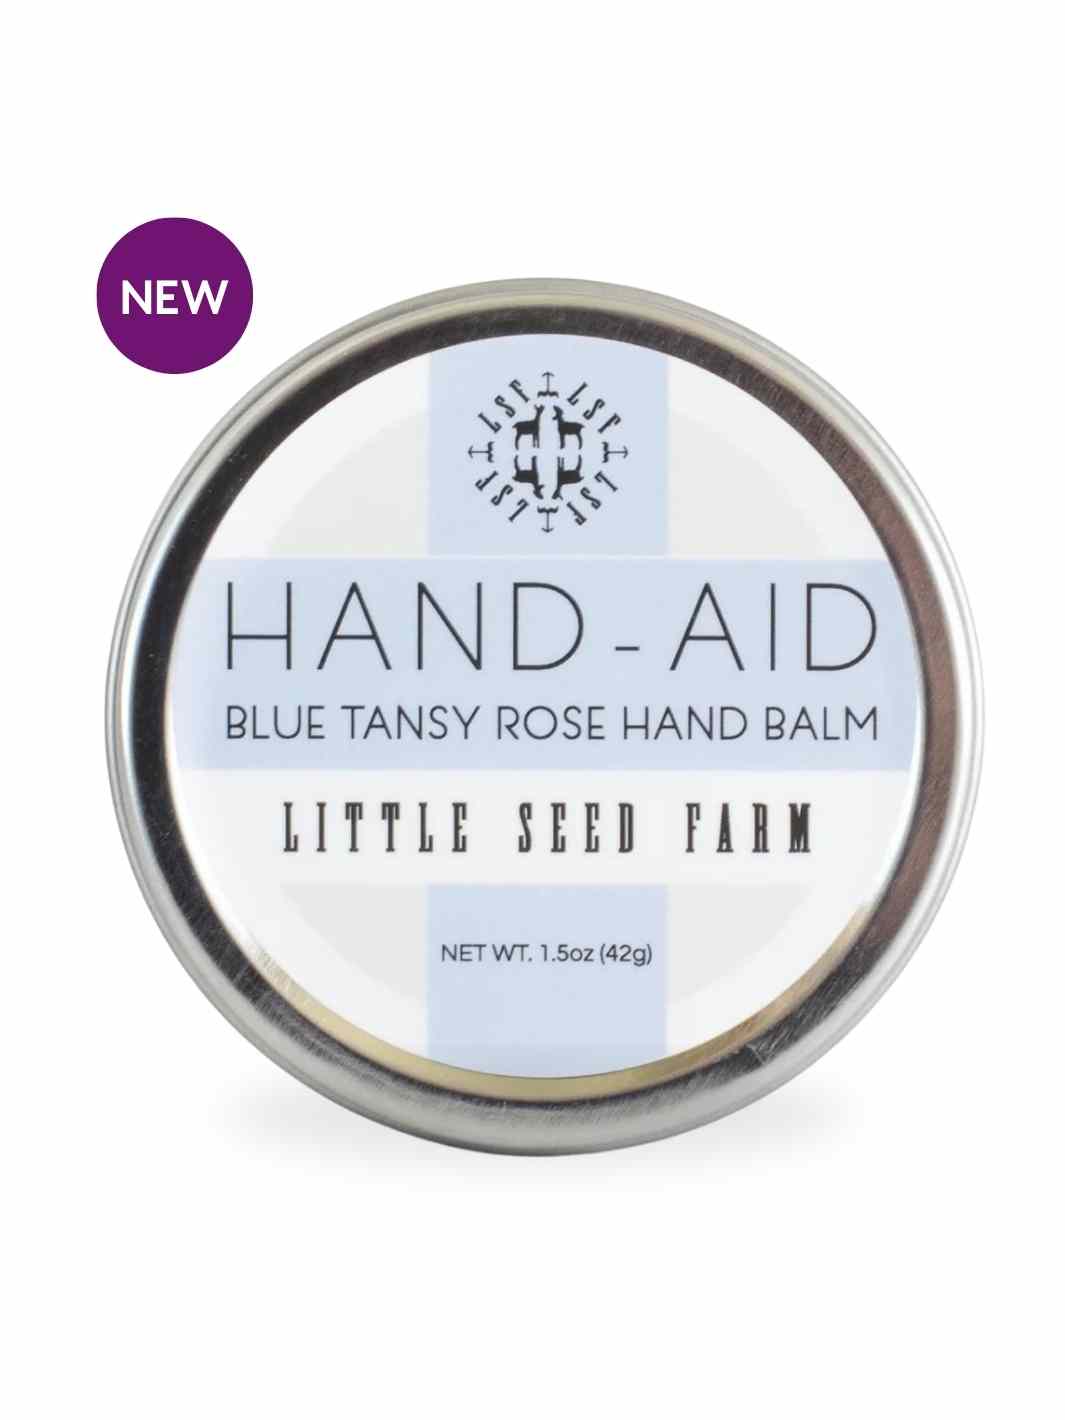 Little Seed Farm Blue Tansy Rose Hand-Aid Healing Hand Balm